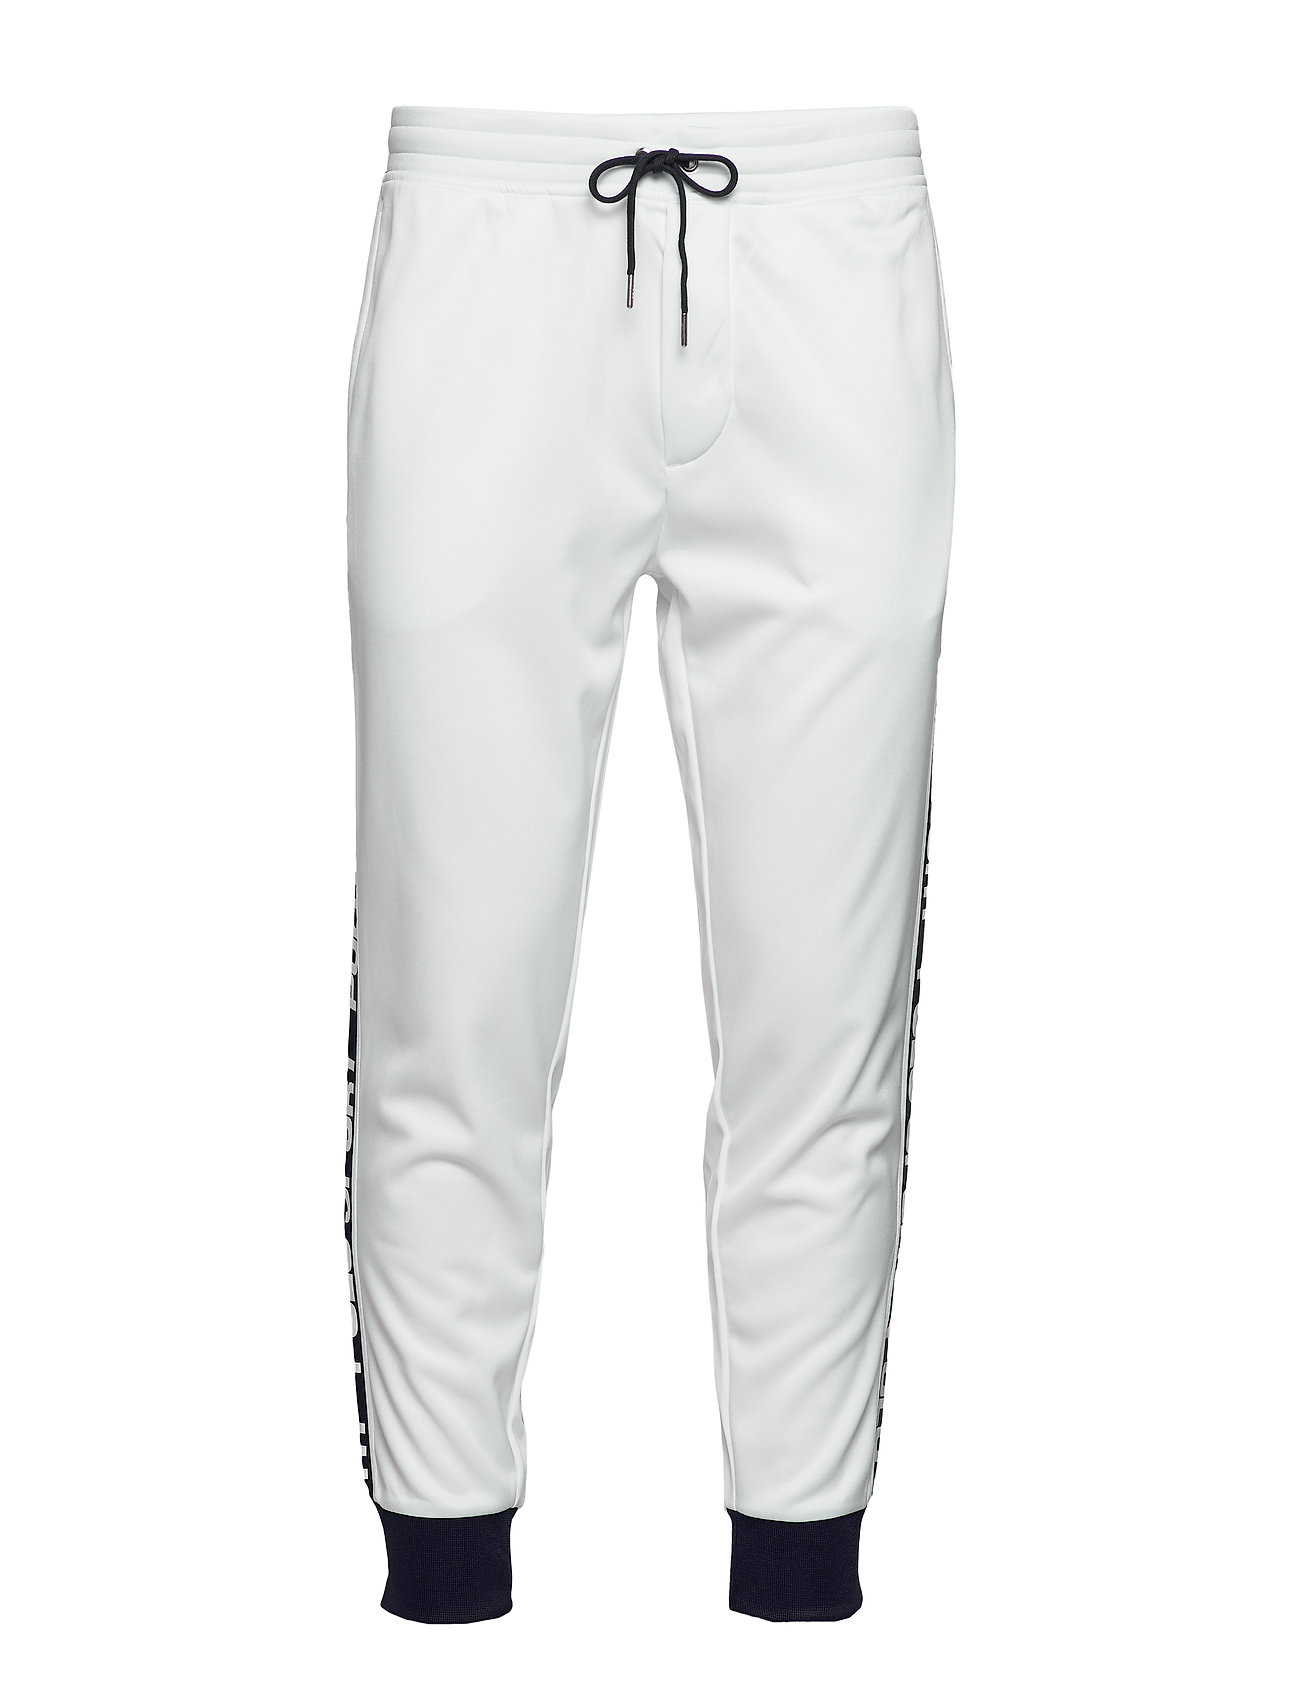 polo sport track pants